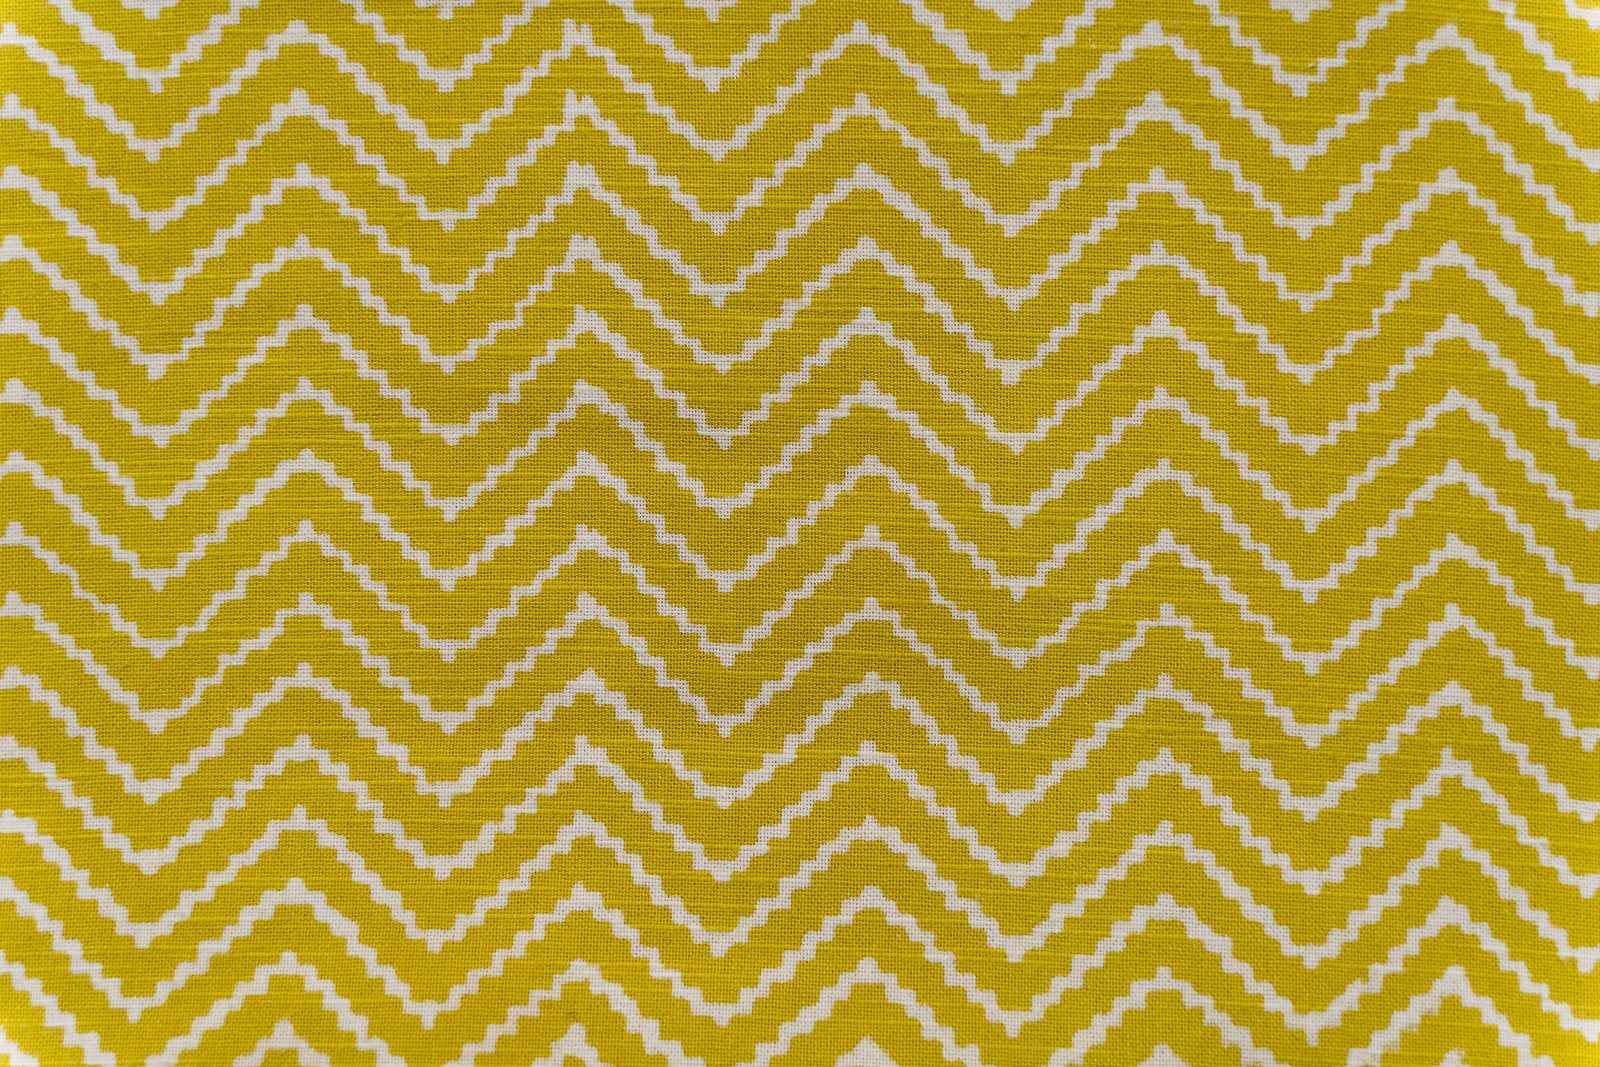 Mustard Block Print Upholstery Cotton Fabric